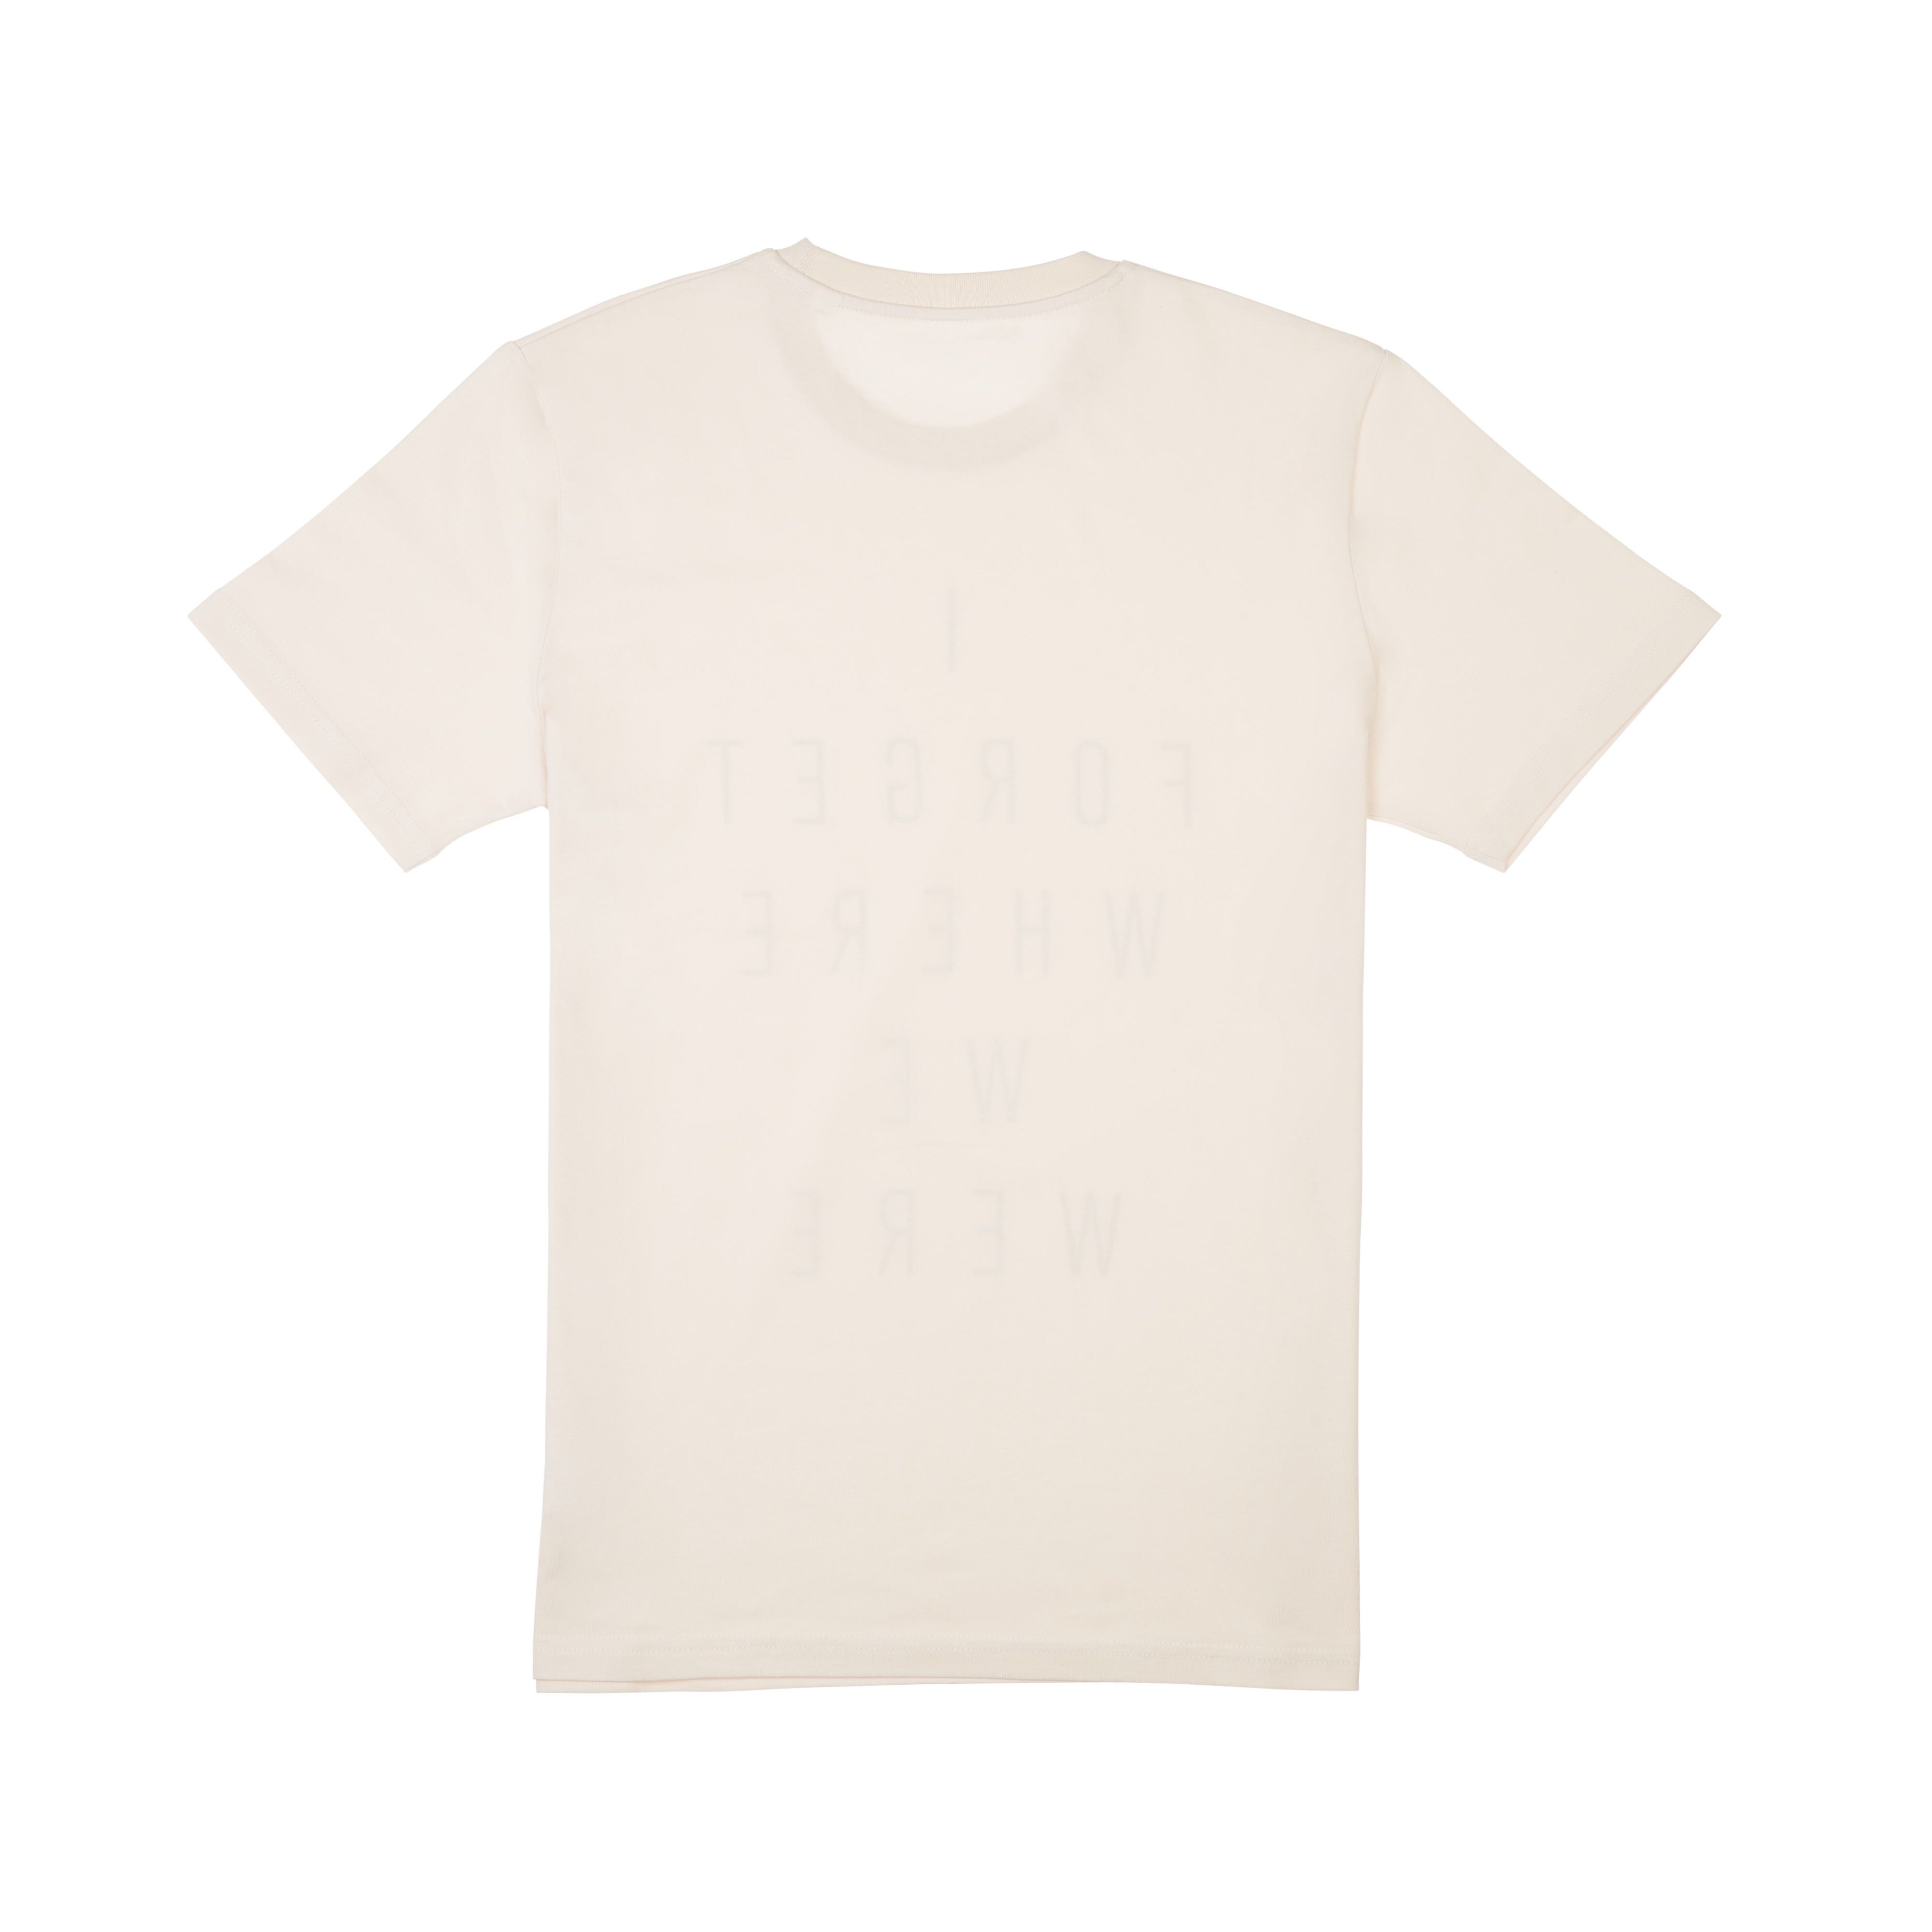 Ben Howard - Ifwww Vapour T-Shirt (Ivory)